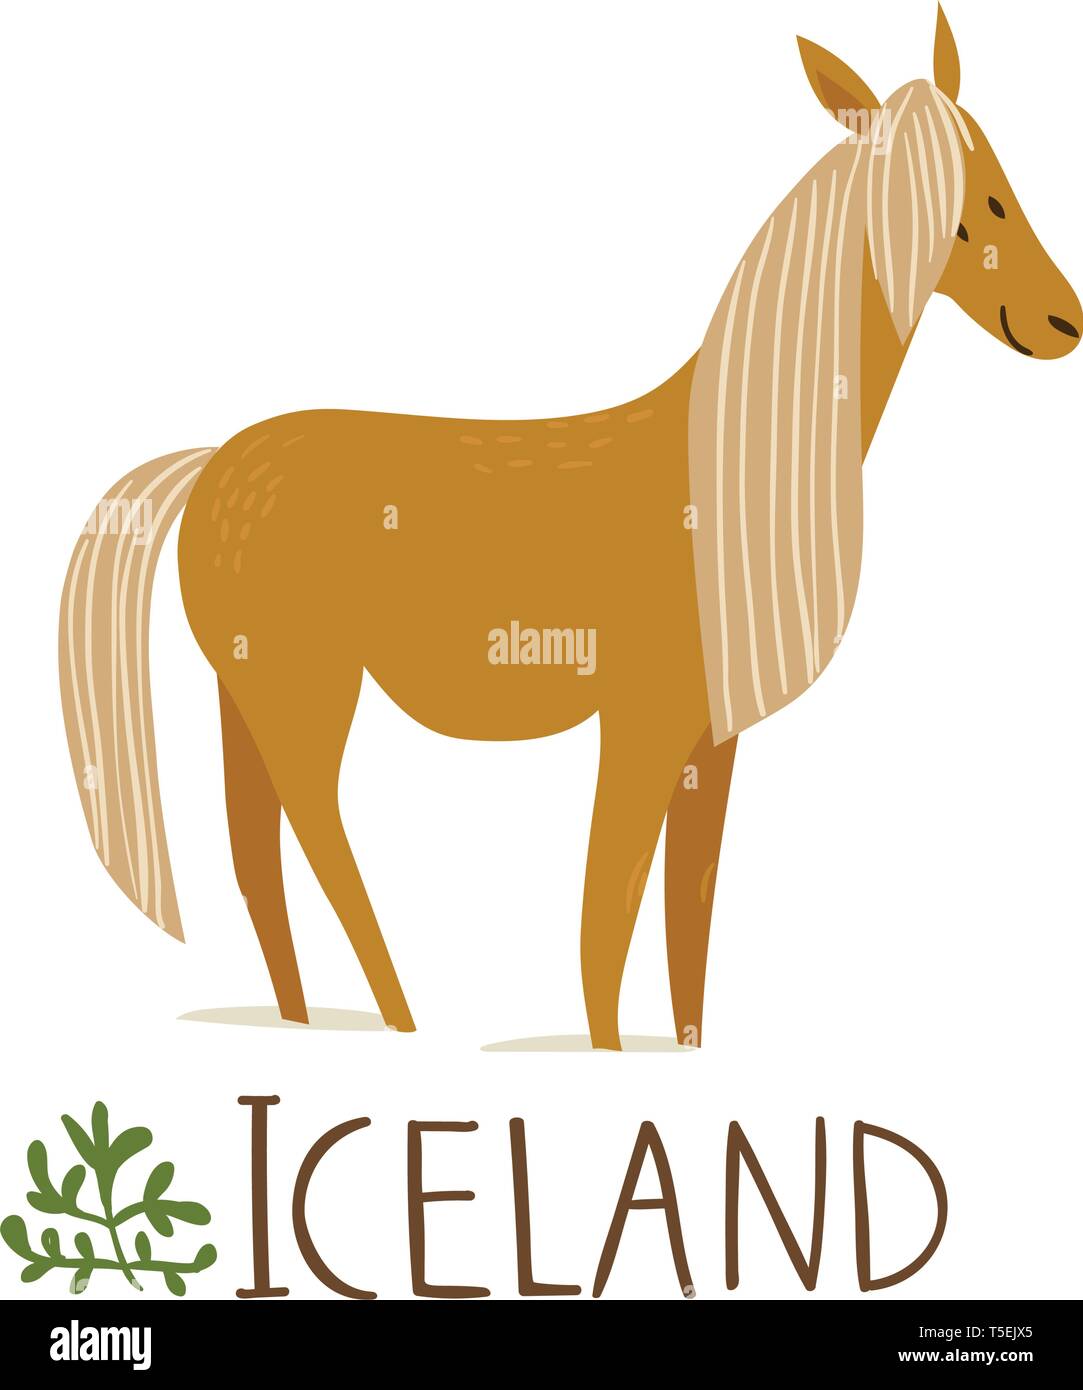 Island natur Vektor symbol Pferd mit Text Stock Vektor